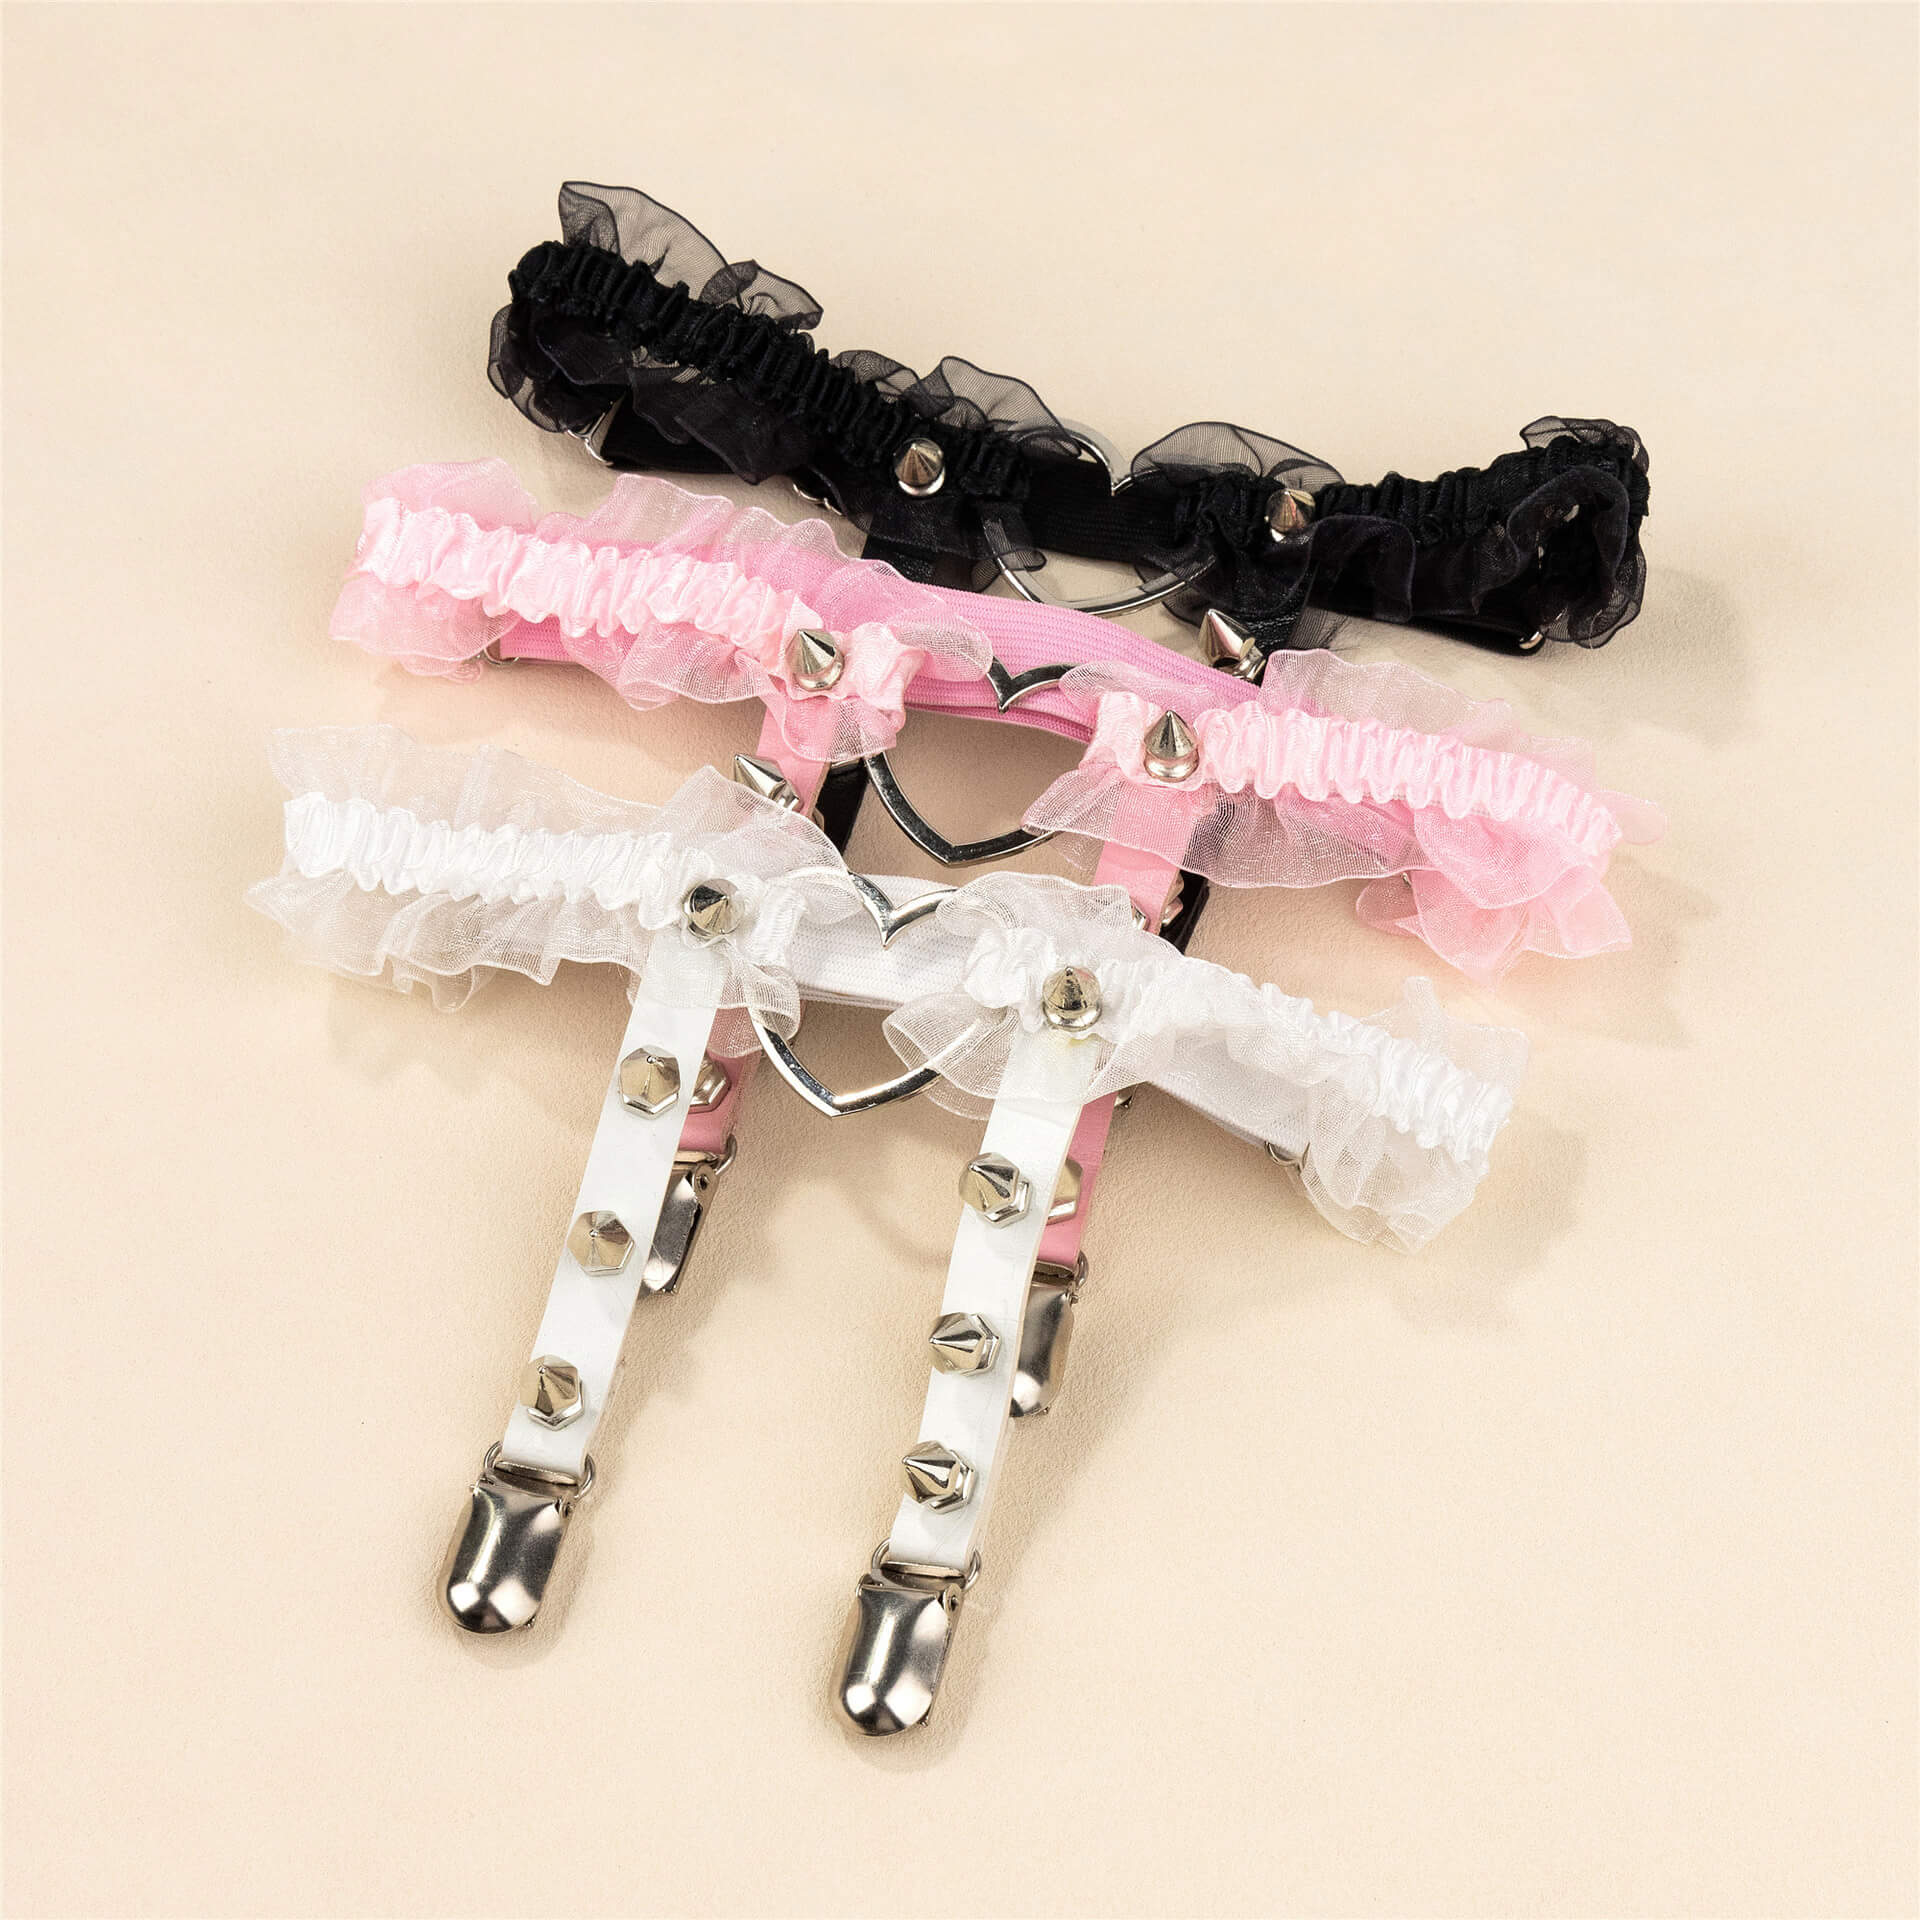 Black/White/Pink Lace Leg Garter With Heart - Femboy Fashion